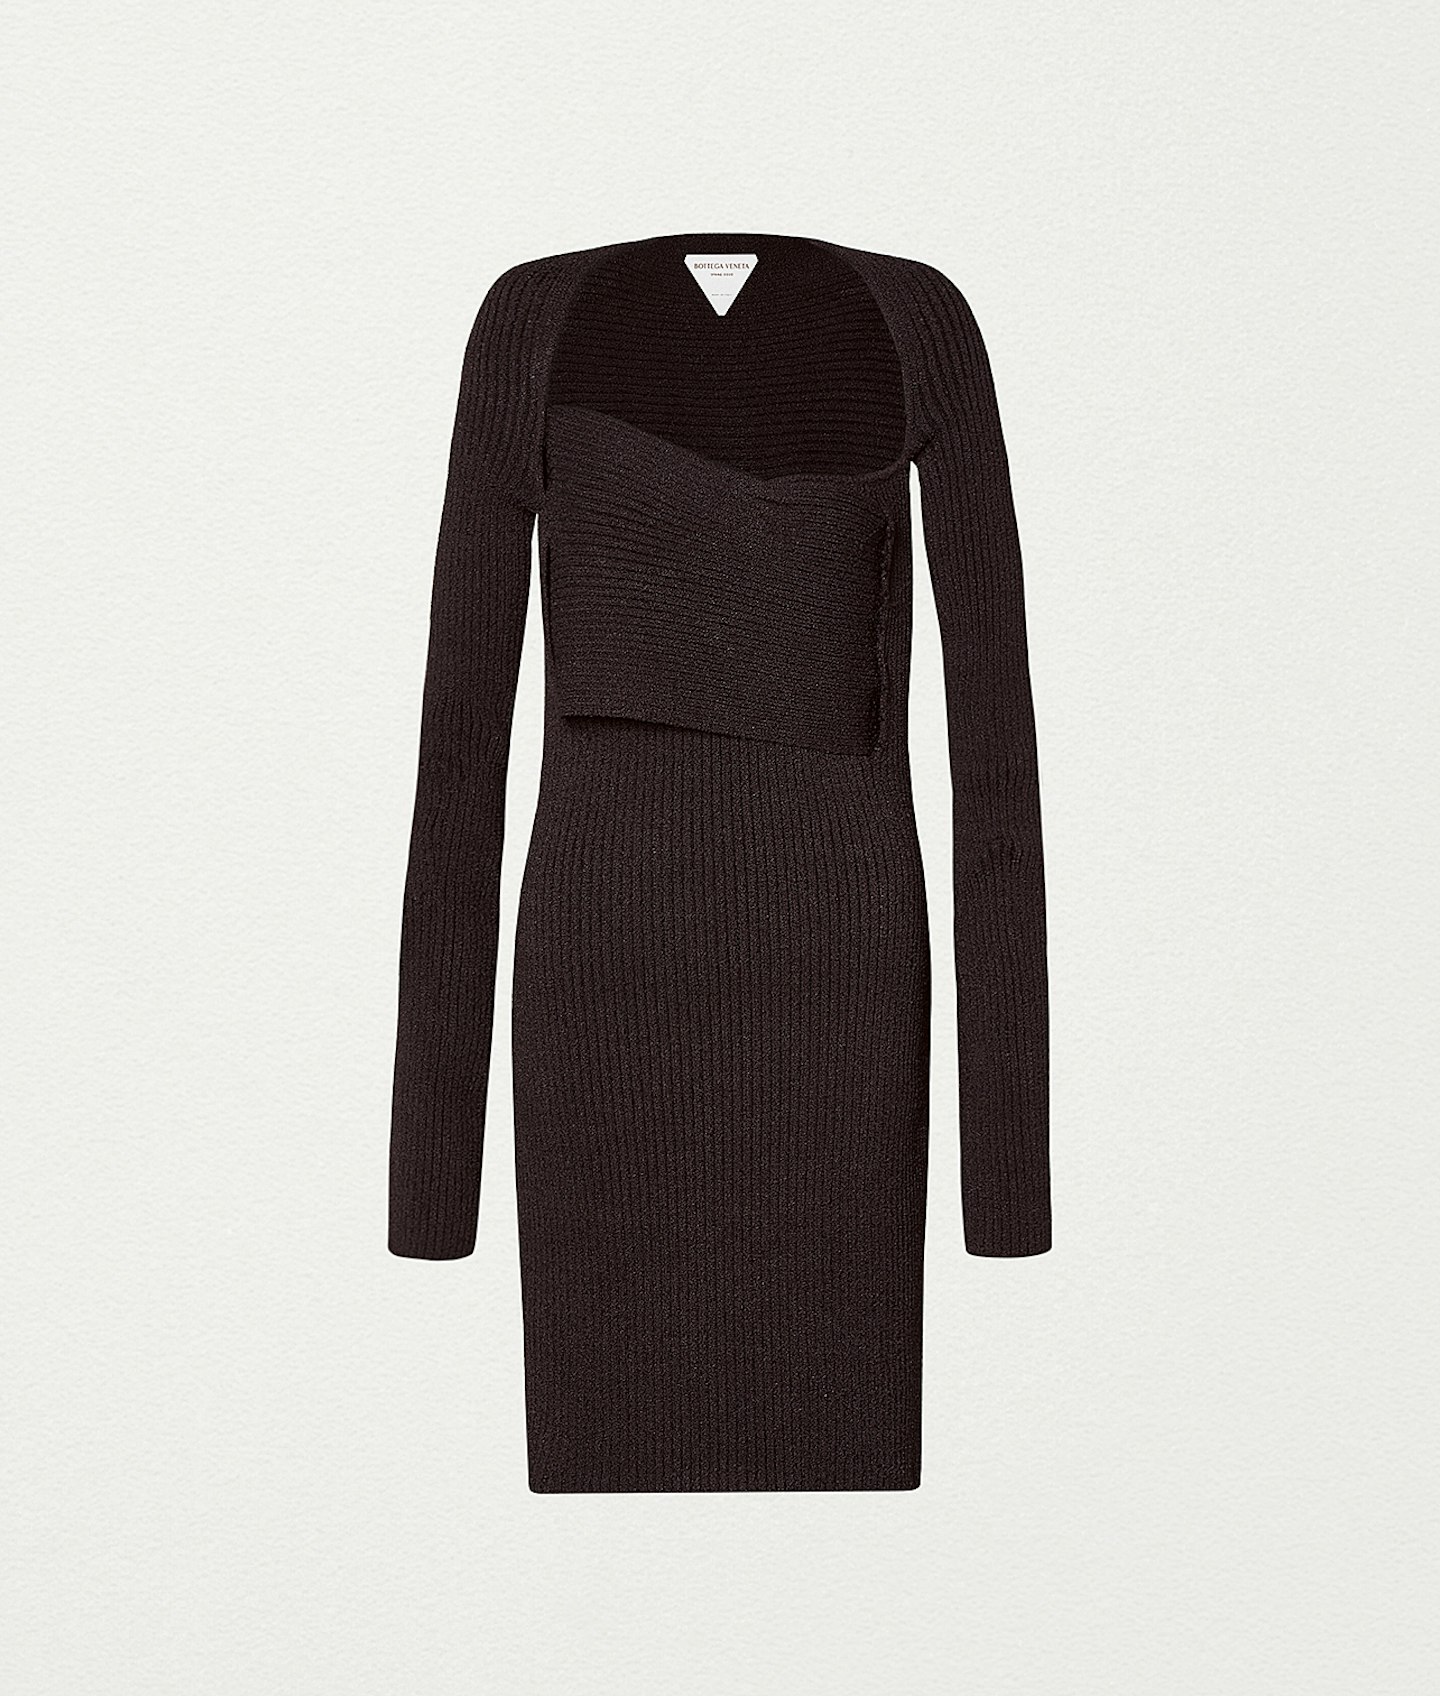 Woven Knit Dress,  £2275, Bottega Veneta